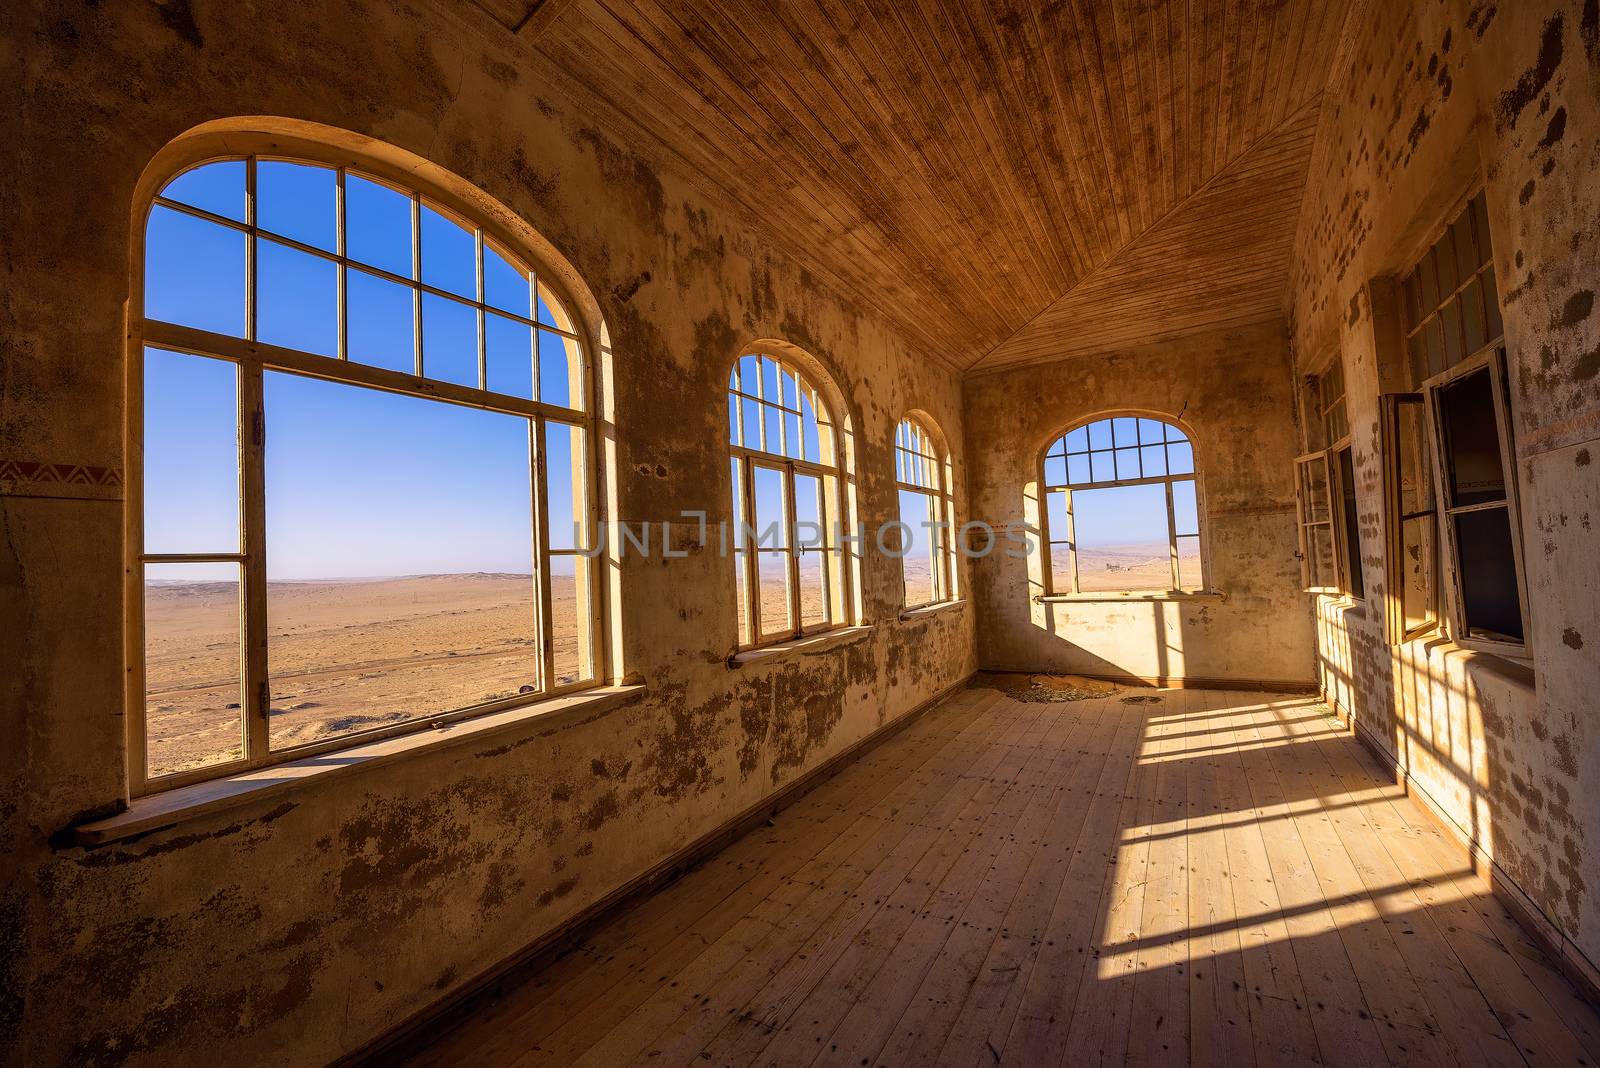 Ruins of the mining town Kolmanskop in the Namib desert near Luderitz in Namibia by nickfox